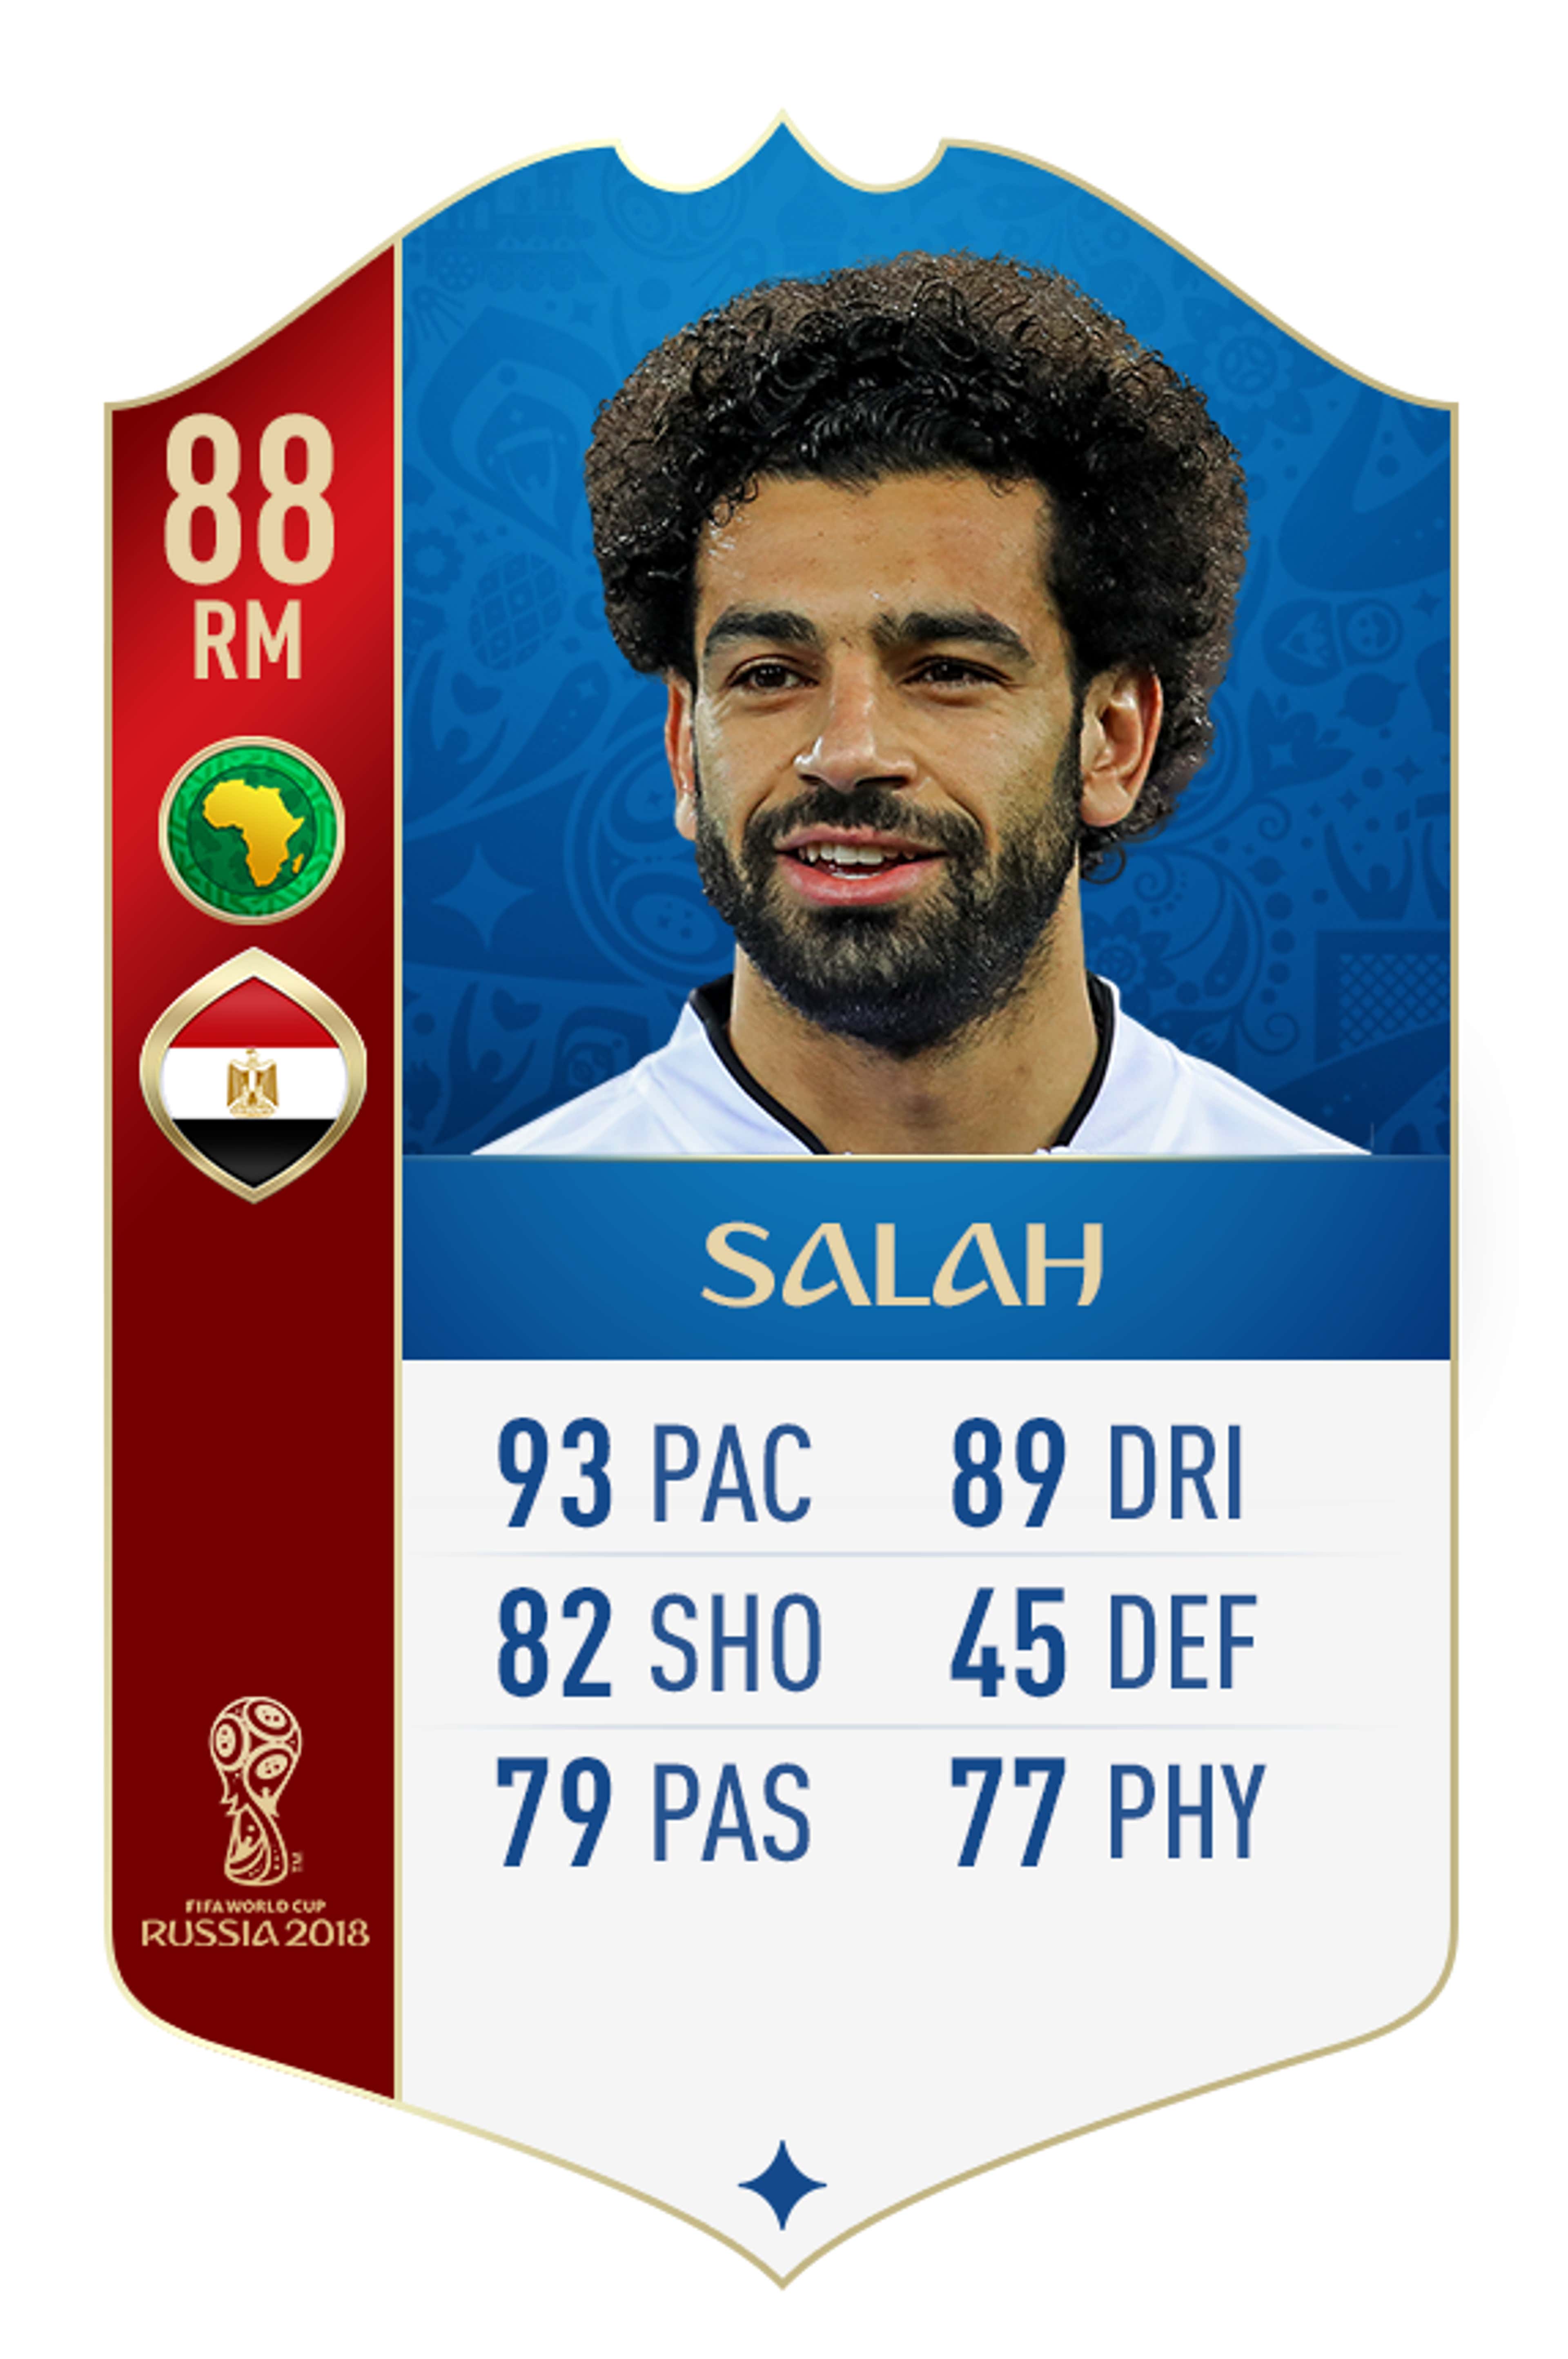 Mohamed Salah FIFA 18 World Cup rating